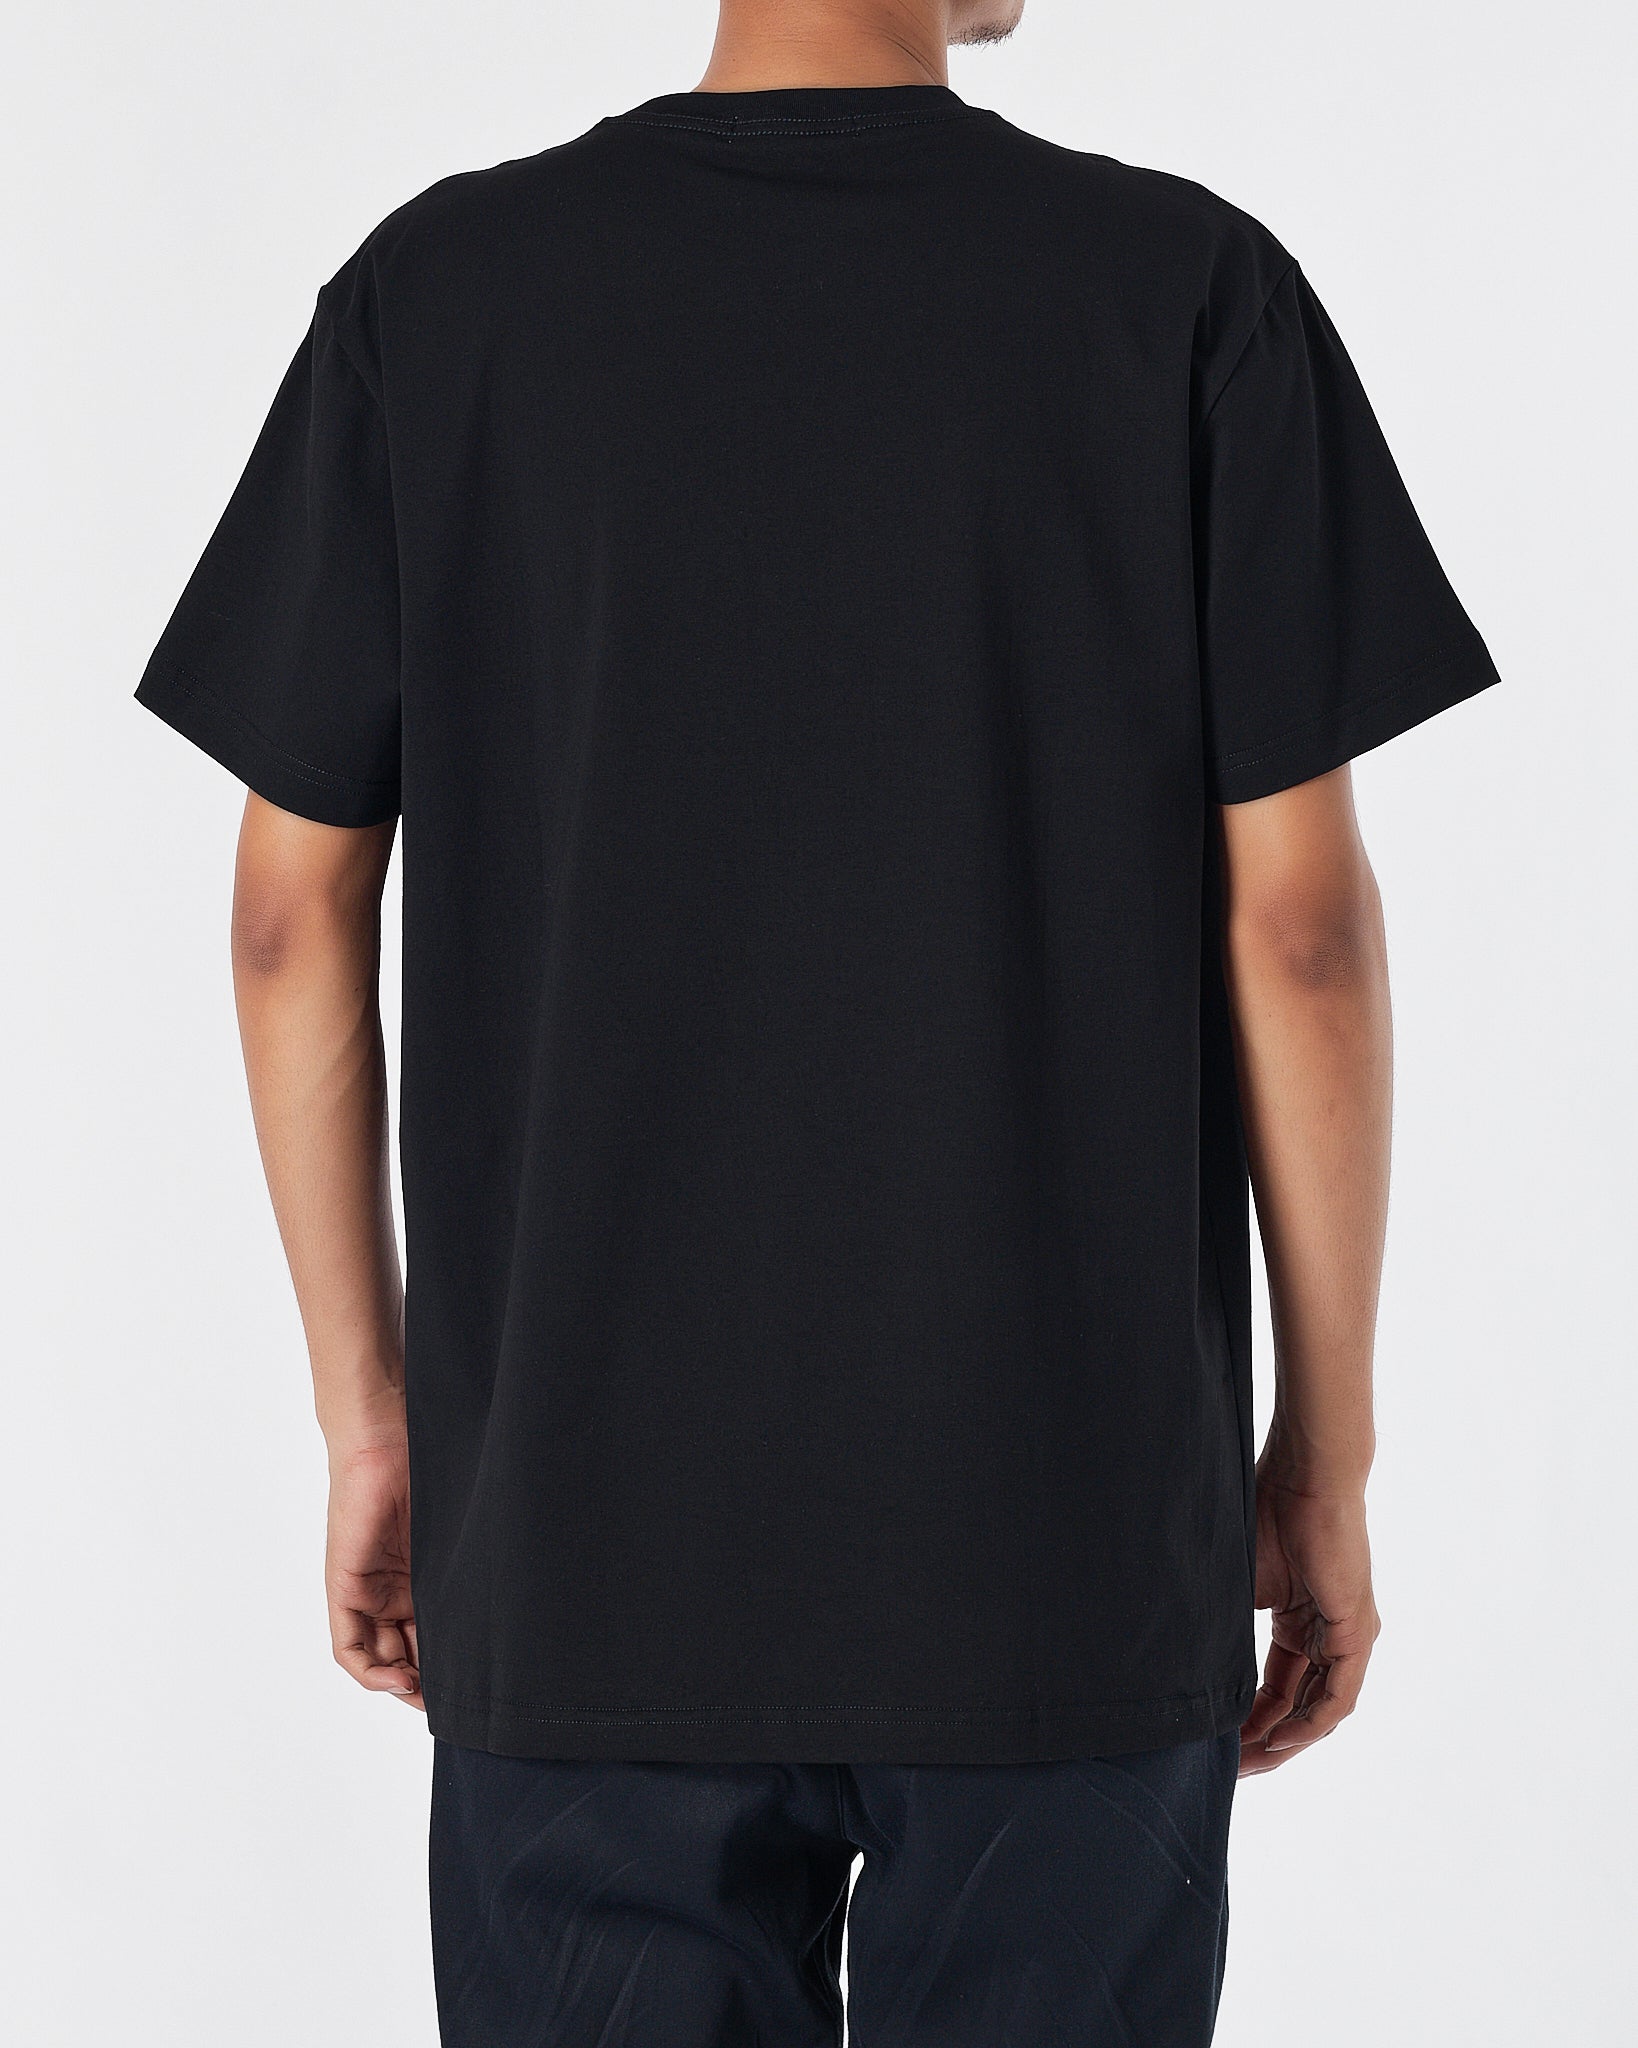 MON Logo Printed Men Black T-Shirt 15.90